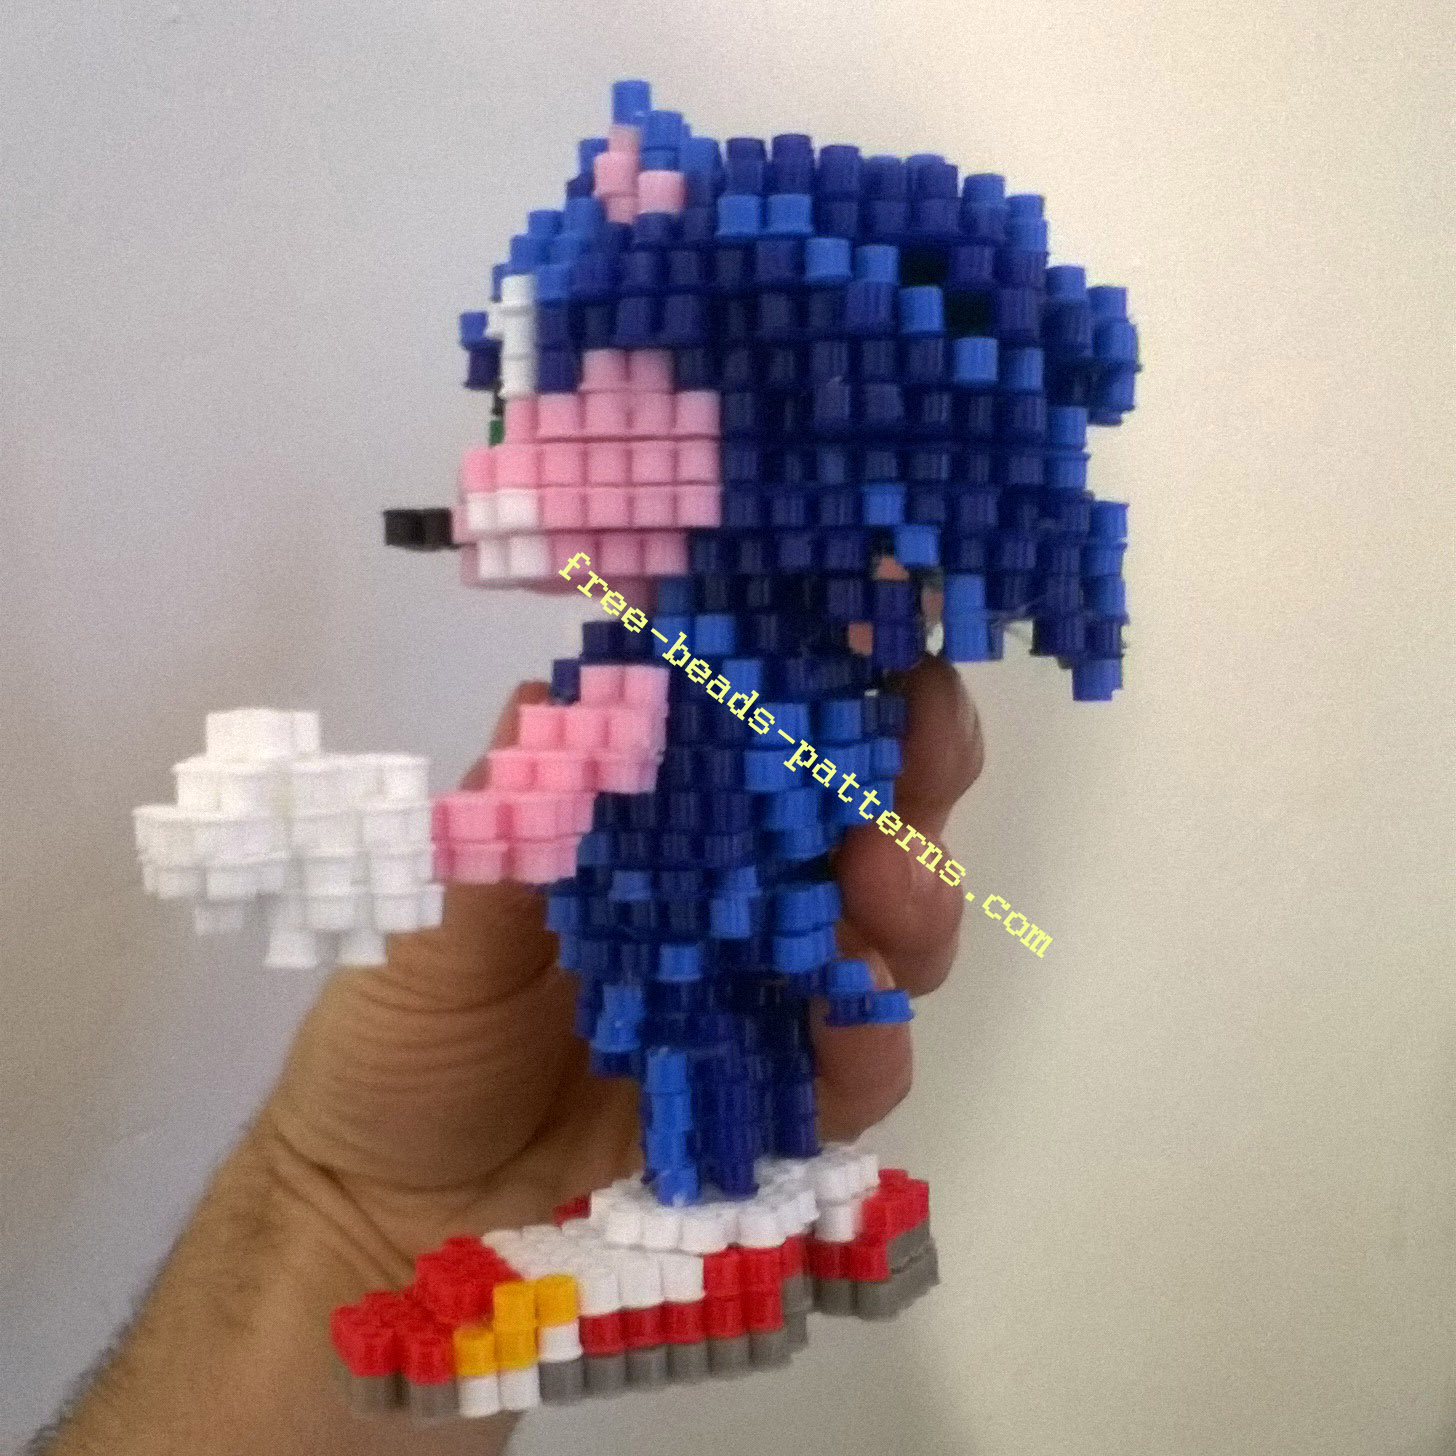 Sonic The Hedgehog Sega videogames 3D perler beads work photos (10)